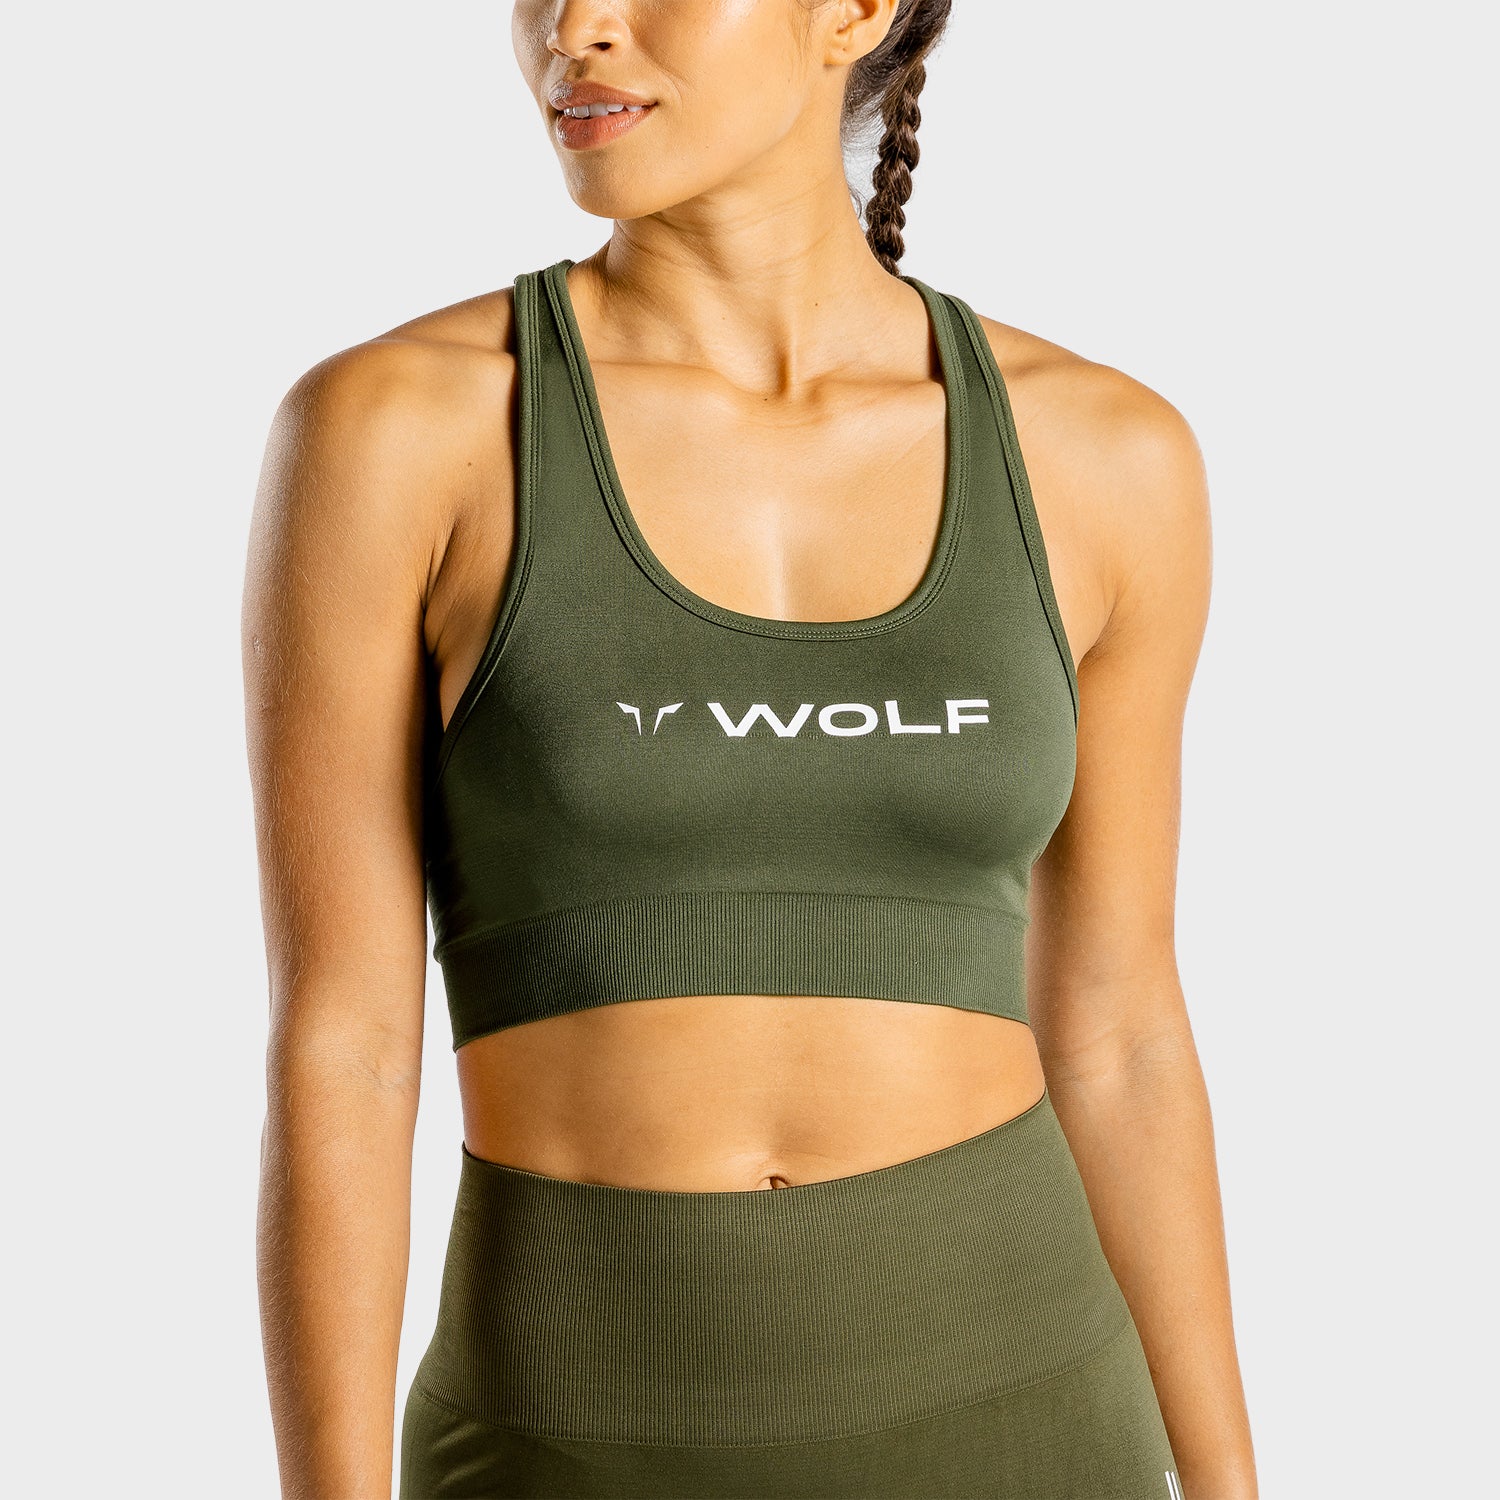 squatwolf-workout-clothes-primal-bra-khaki-sports-bra-for-gym